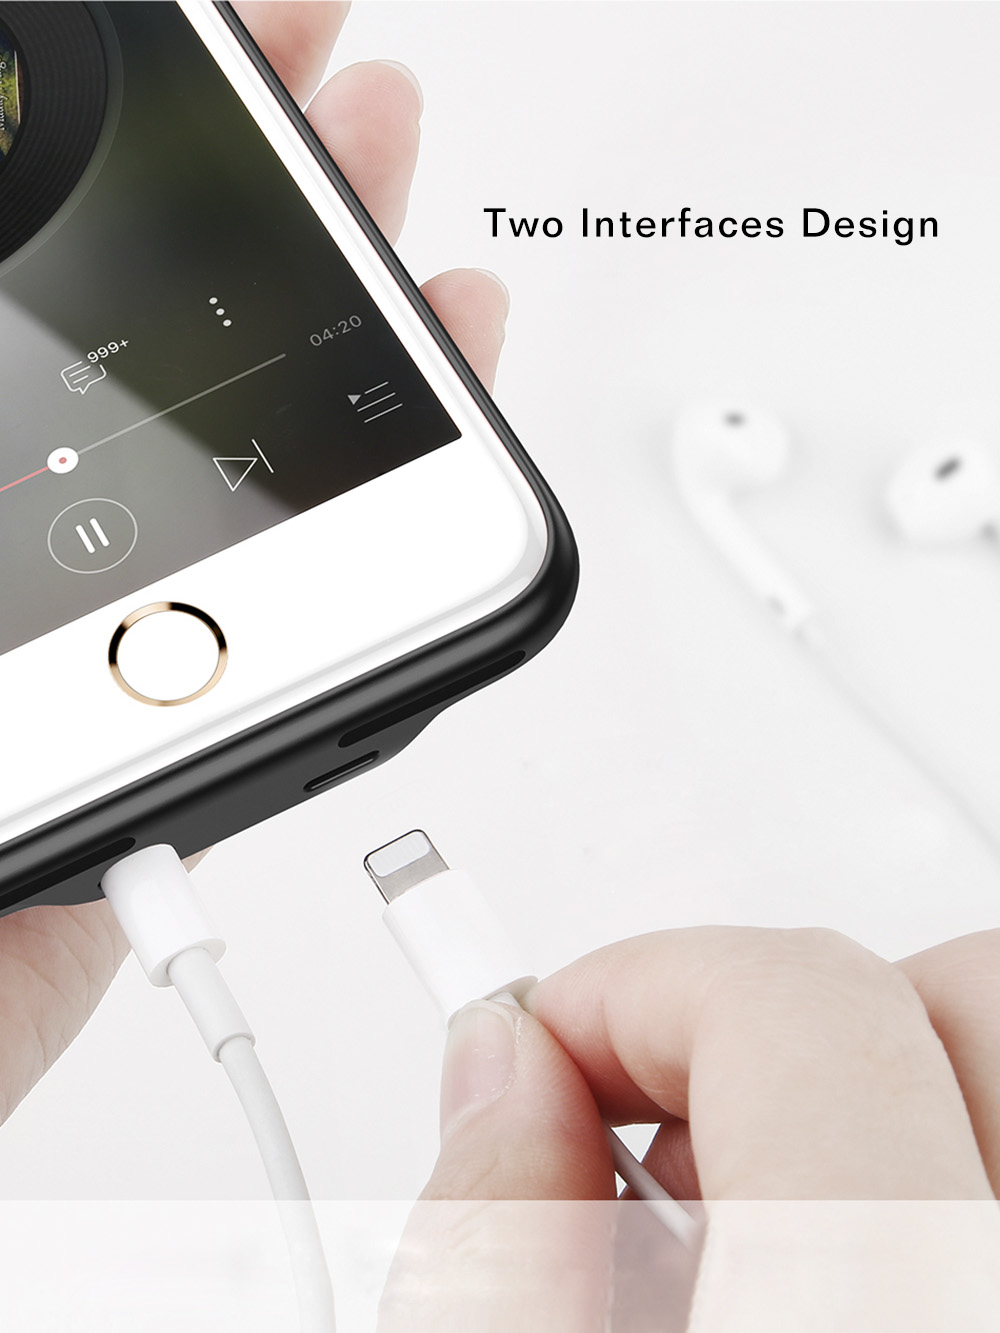 Baseus Audio Case Double IP Interfaces PC TPU for iPhone 7 Plus / 8 Plus 